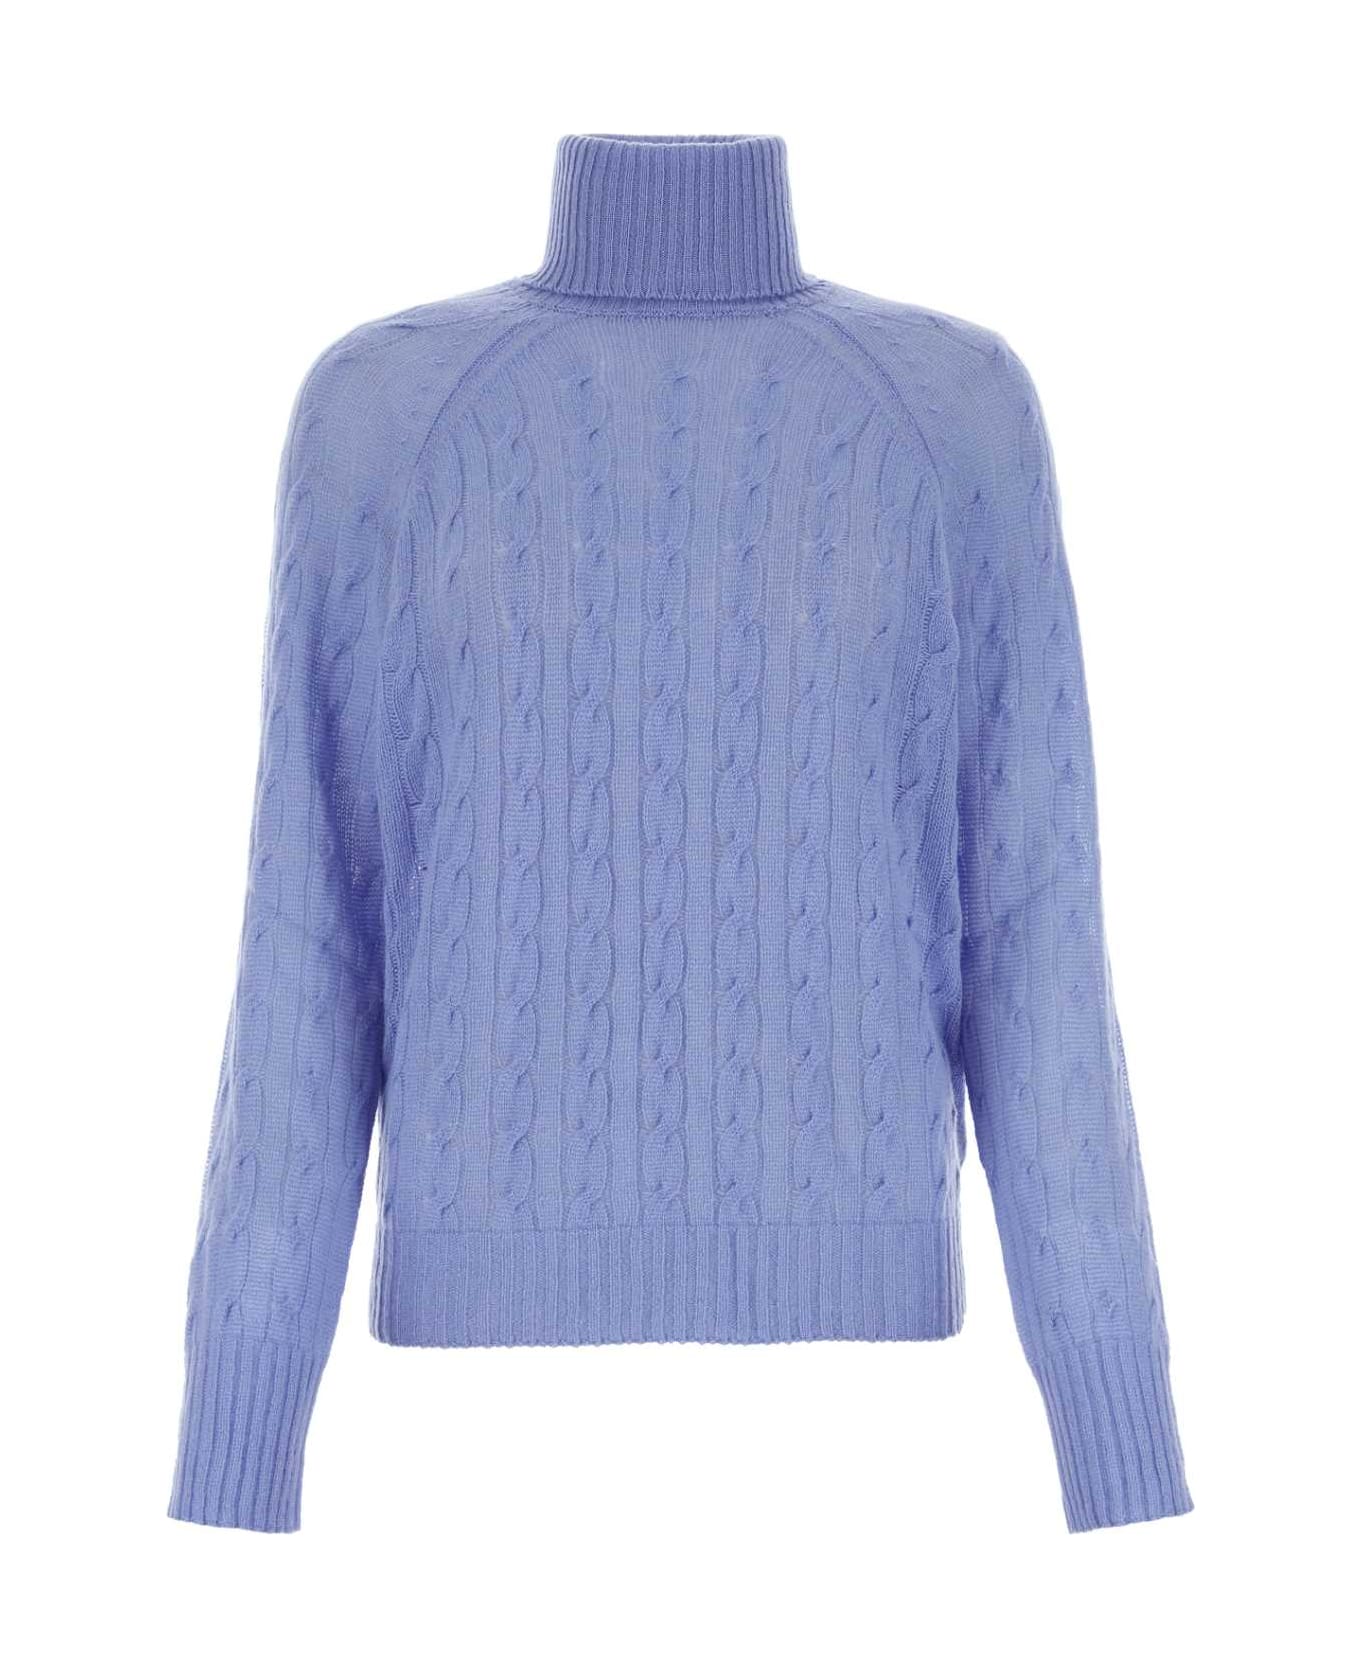 Etro Powder Blue Cashmere Sweater - LIGHTBLU